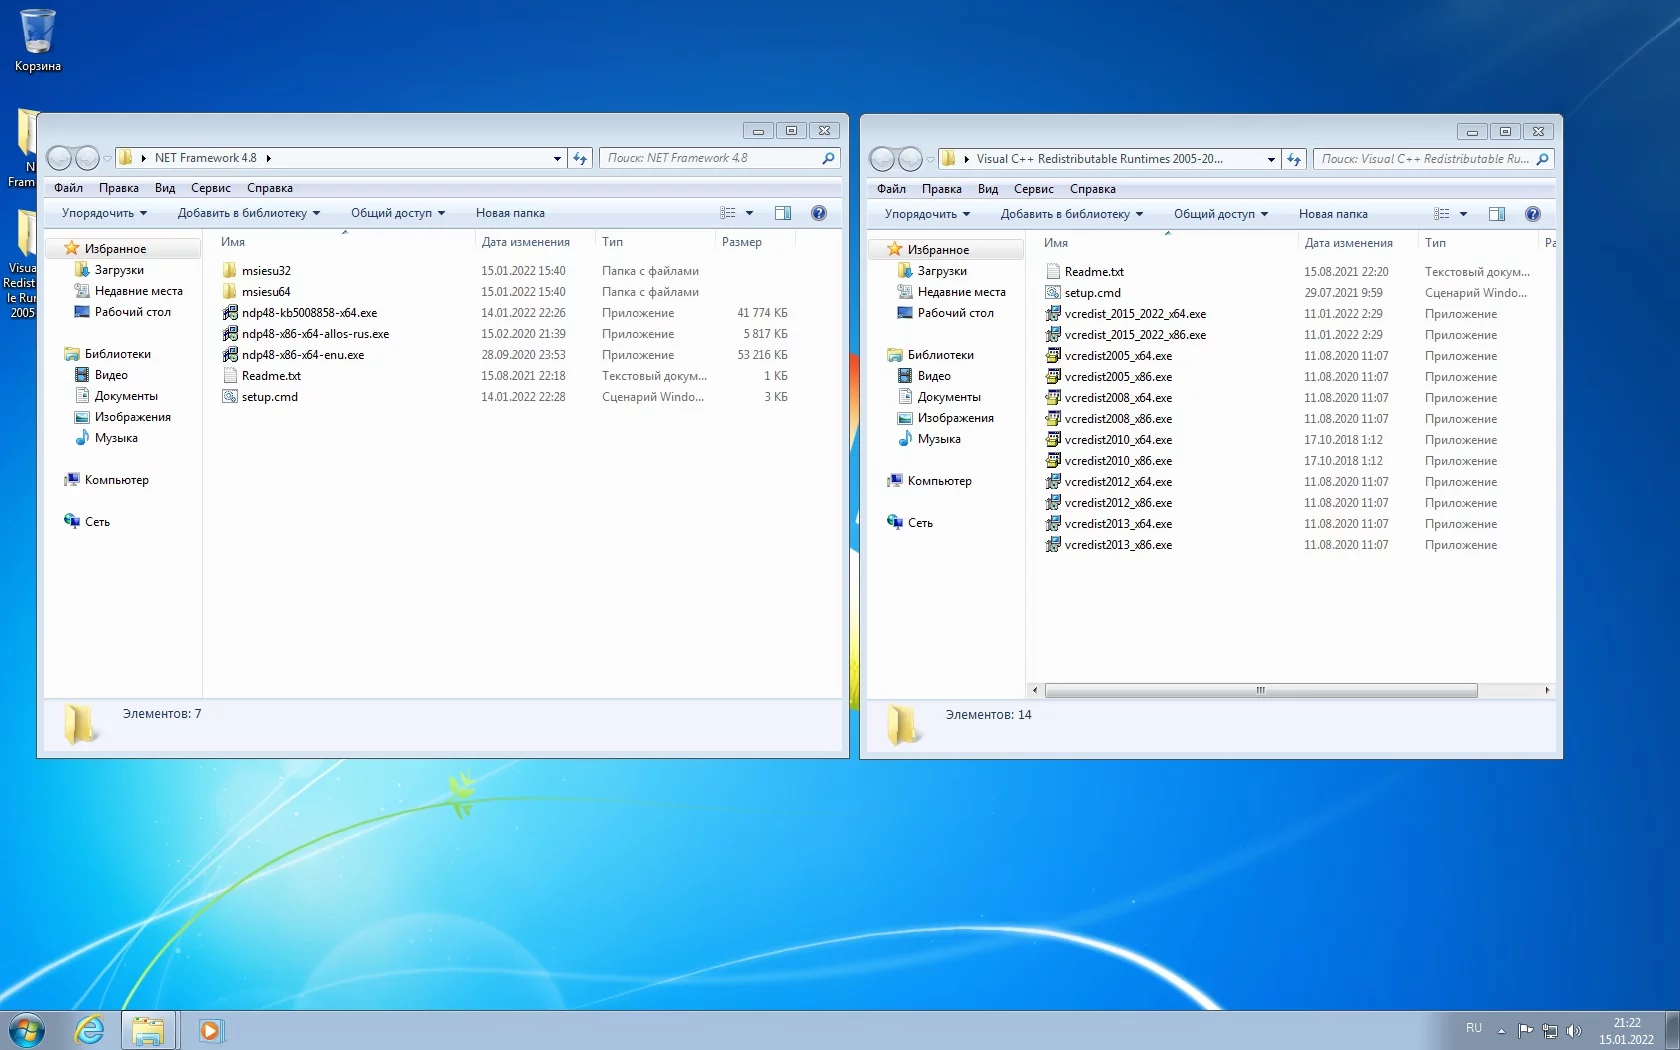 Windows 7 SP1 6.1 (Build 7601.25829) (13in2) x86/x64 by Sergei Strelec